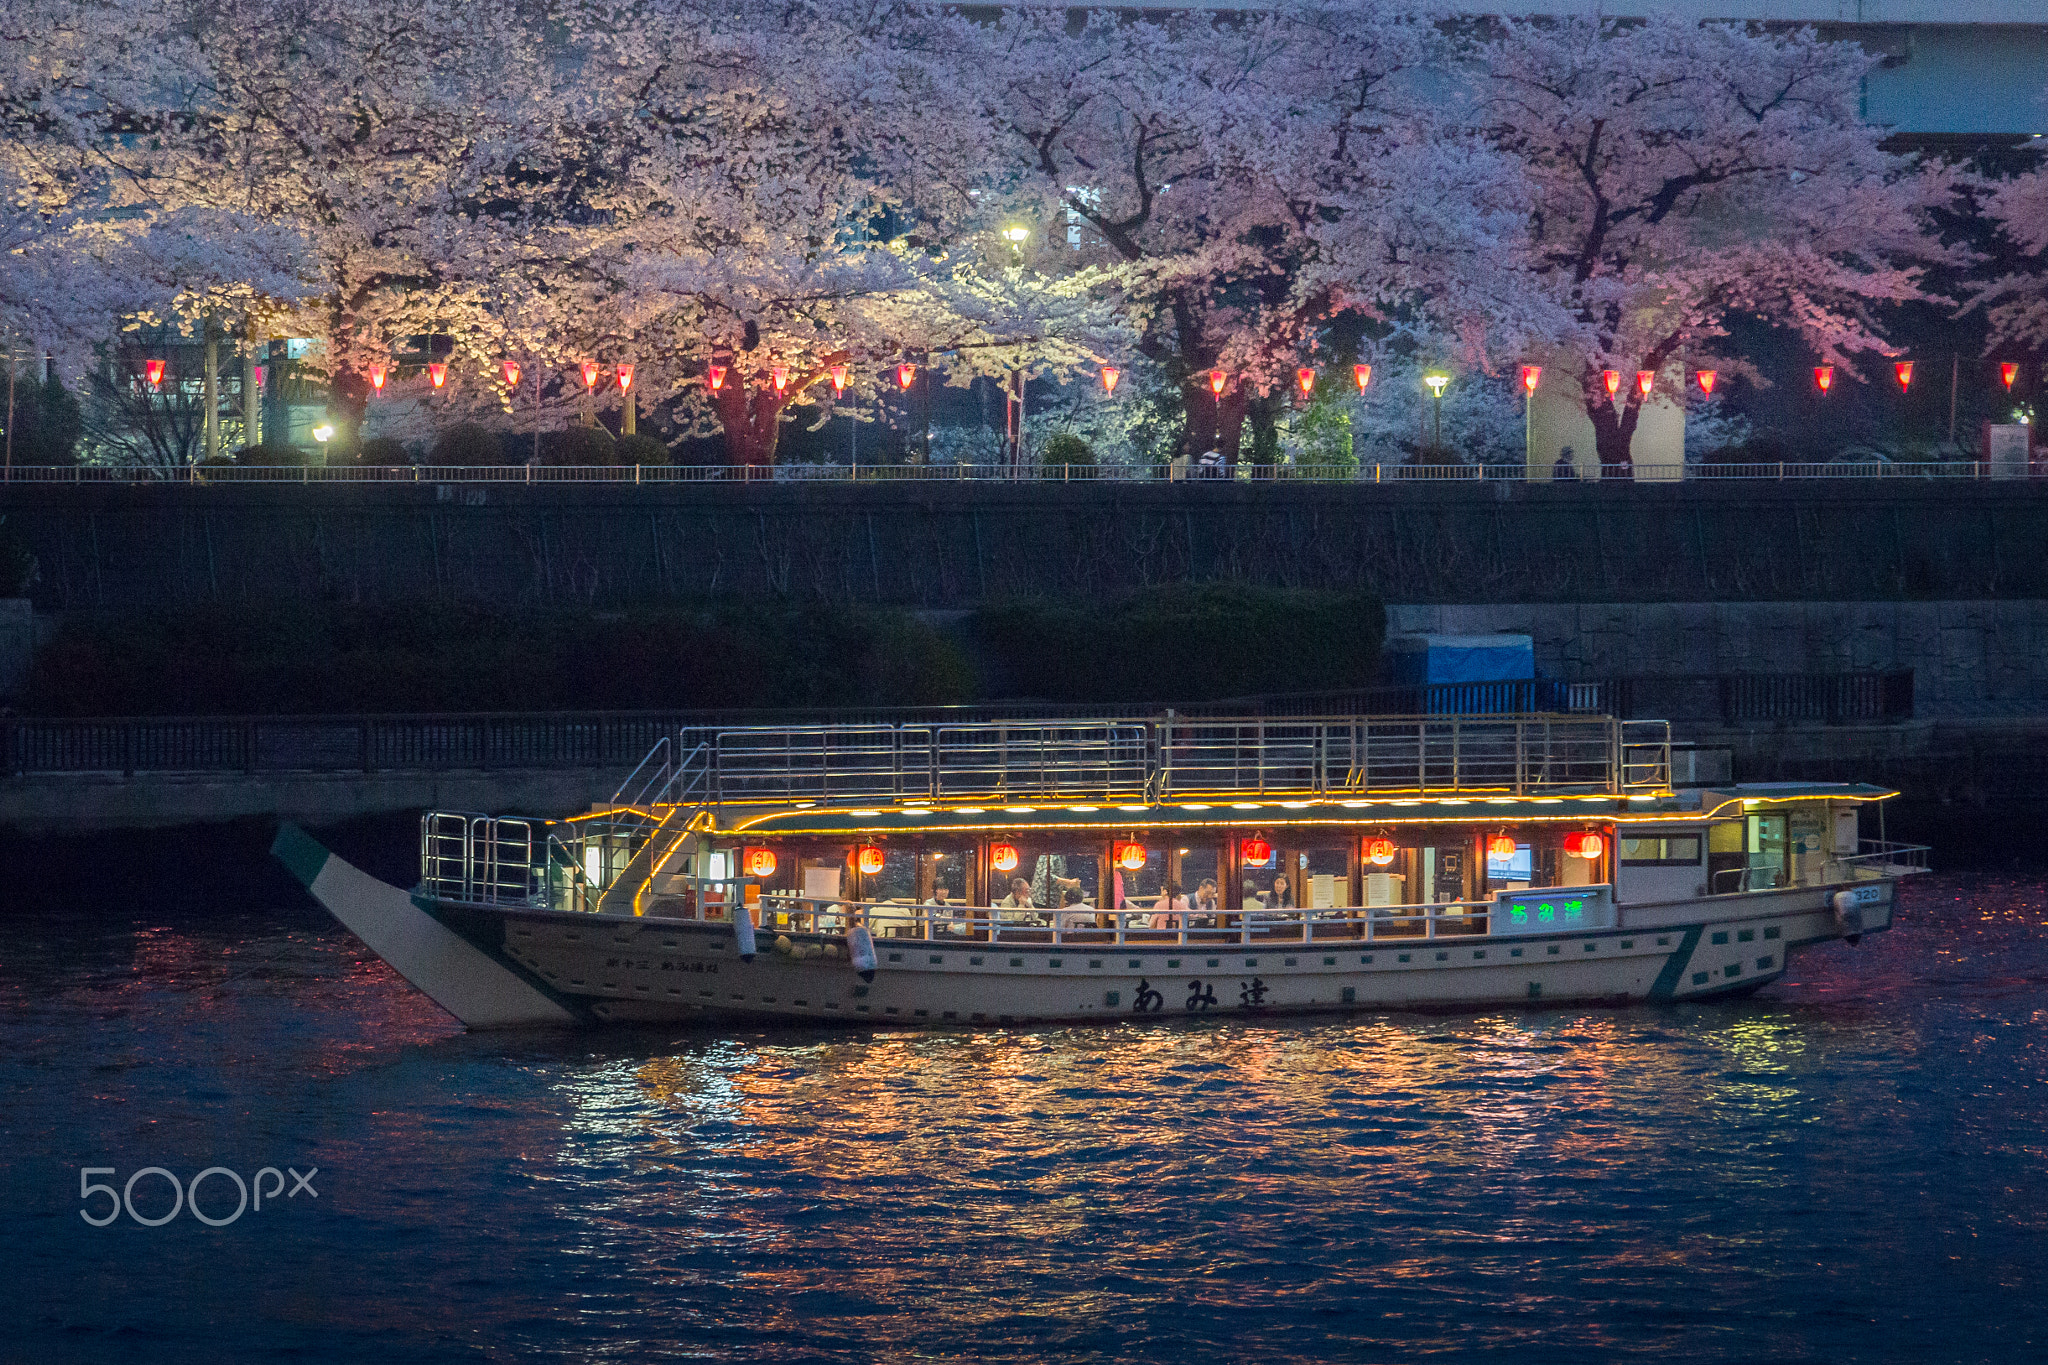 Boat party at sakura festival